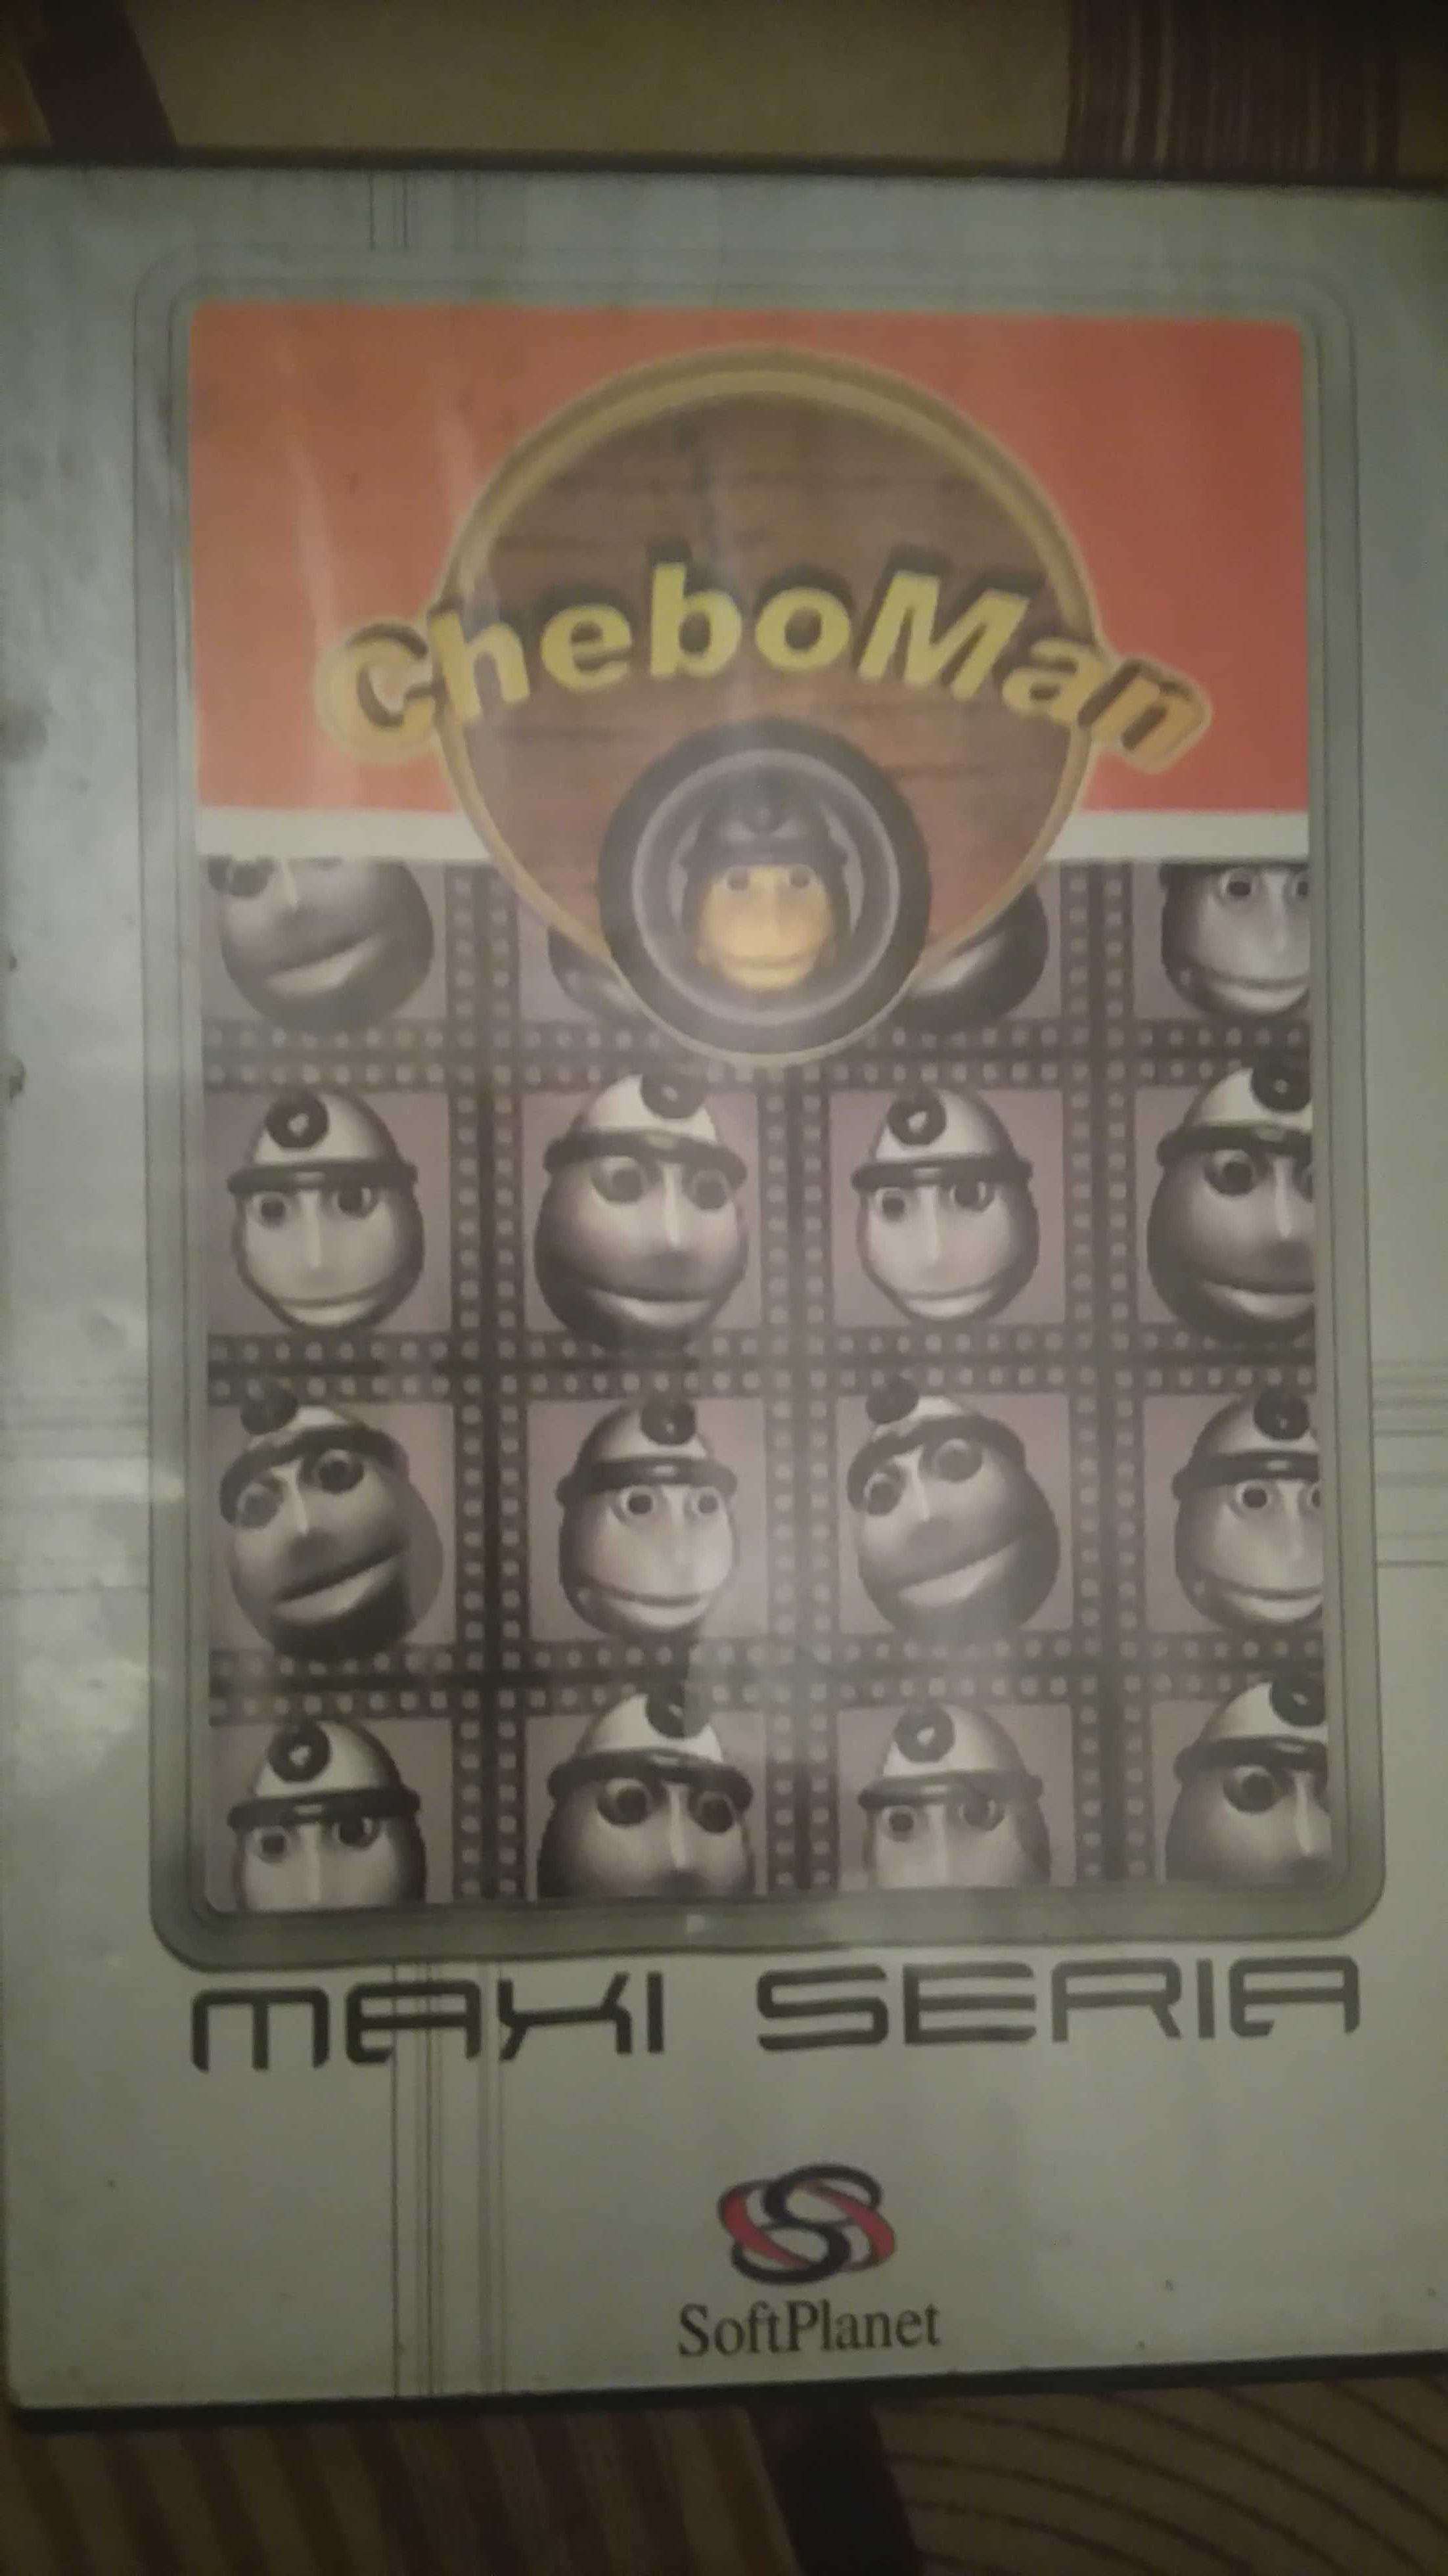 Chebo Man-gra pc cd-rom maxi series z 2004 roku jak Mario pl